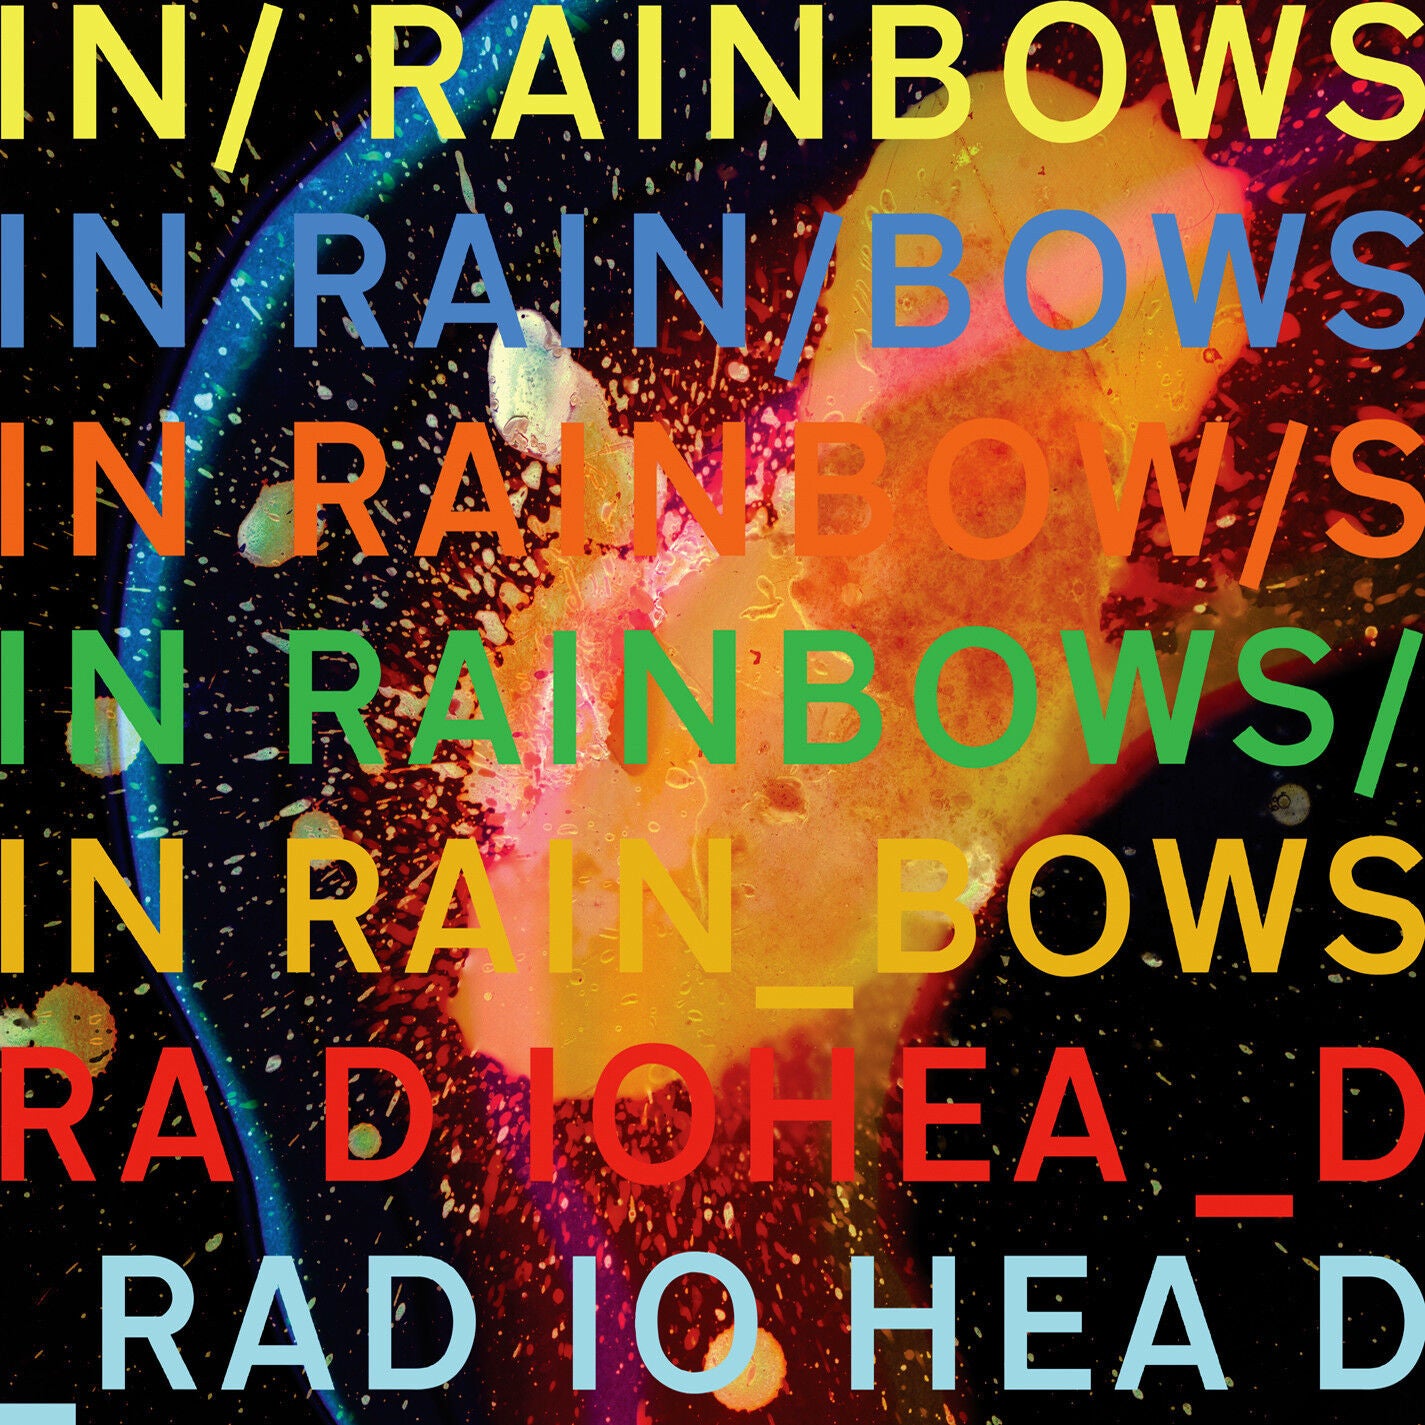 Radiohead IN RAINBOWS 7th Album 180g XL RECORDINGS New Sealed Vinyl Record LP